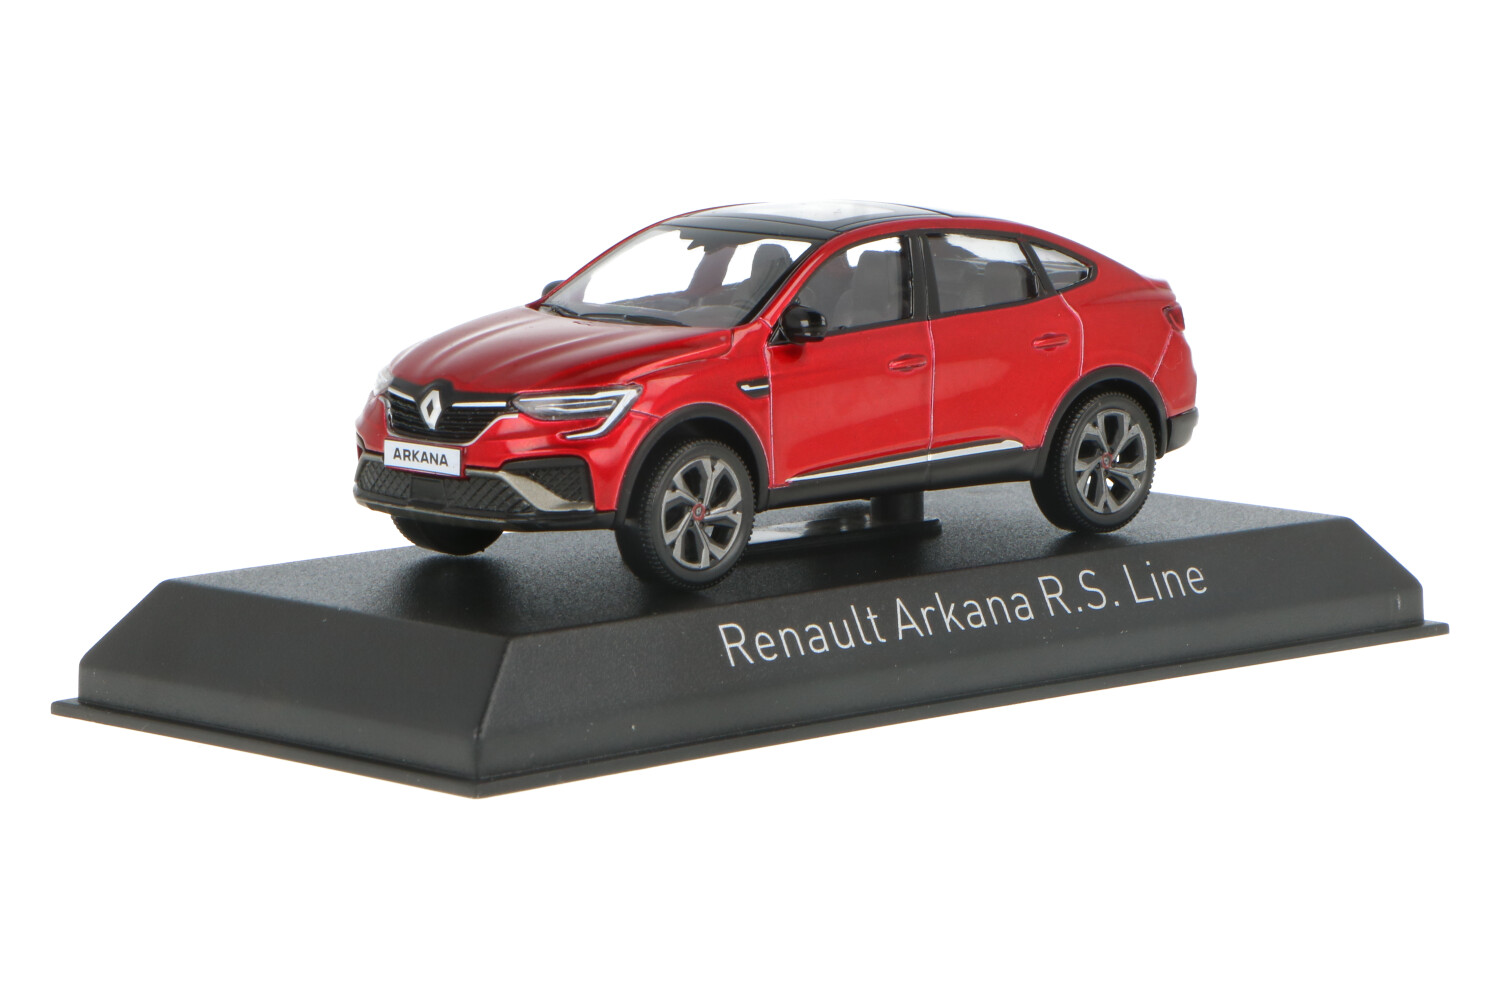 NOREV 517683 Flamme Red 1/43 Renault Arkana R.S Line 2021 